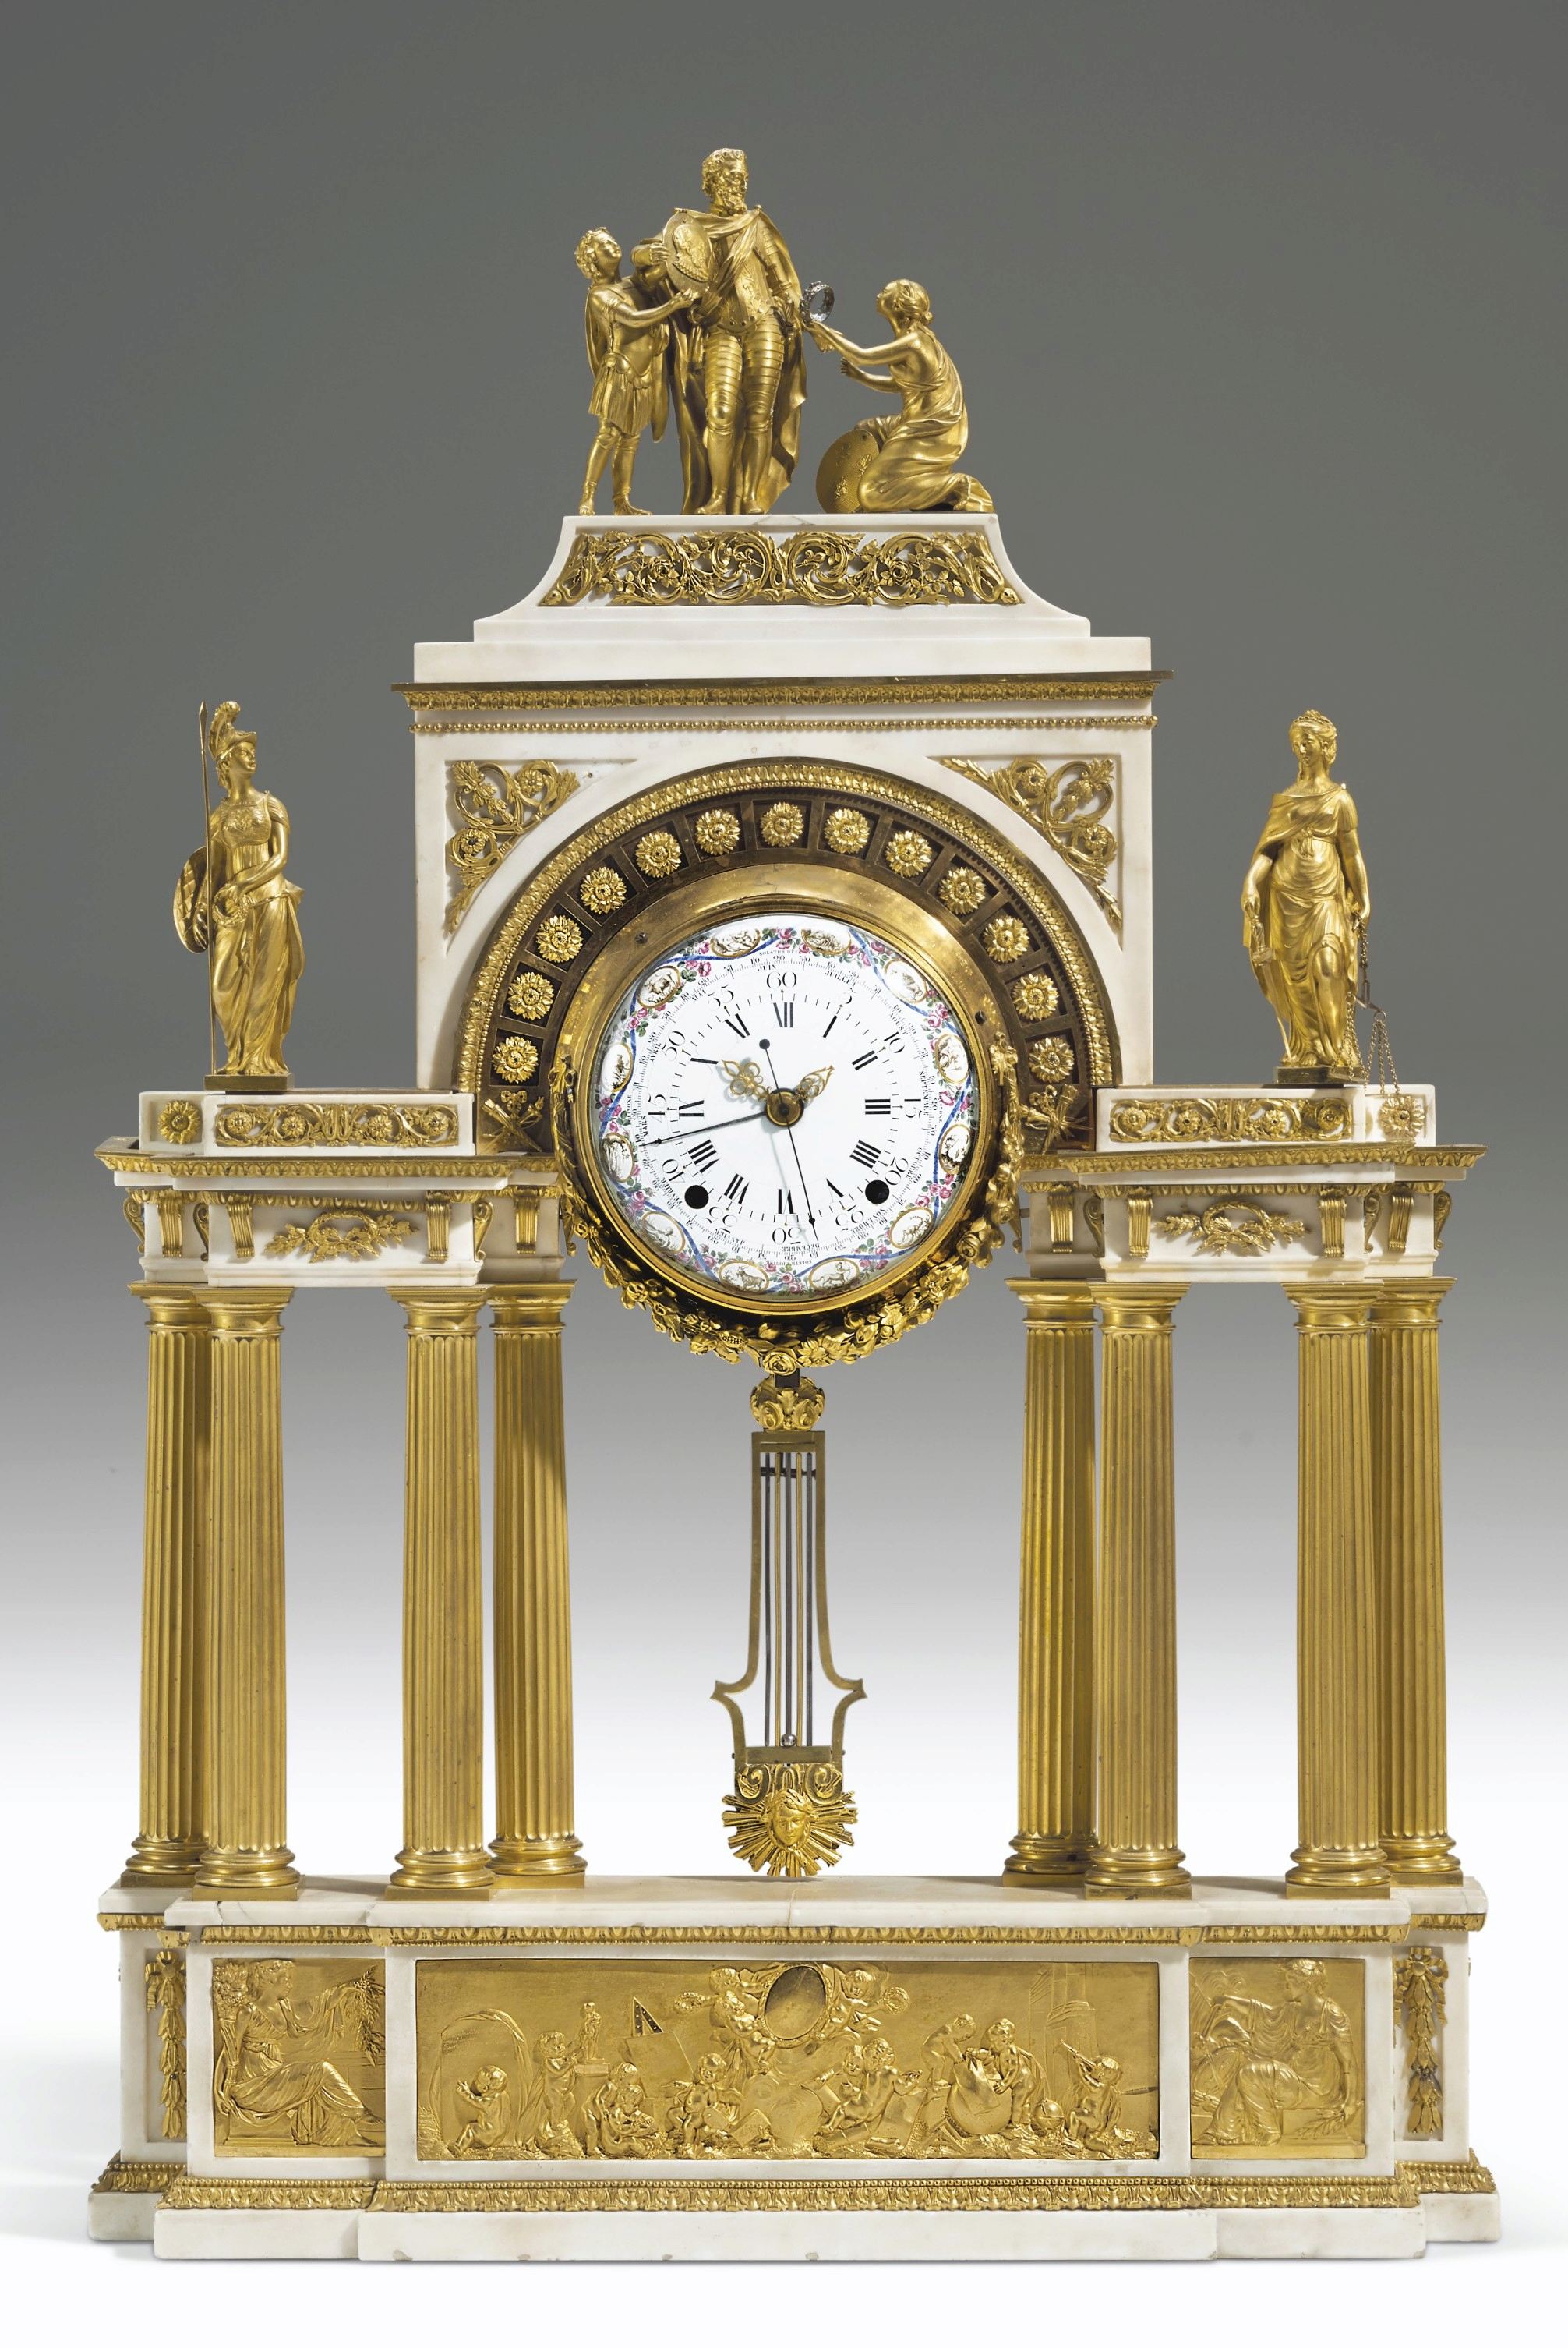 Horloges et pendules du XVIIIe siècle - Page 2 2020_n66